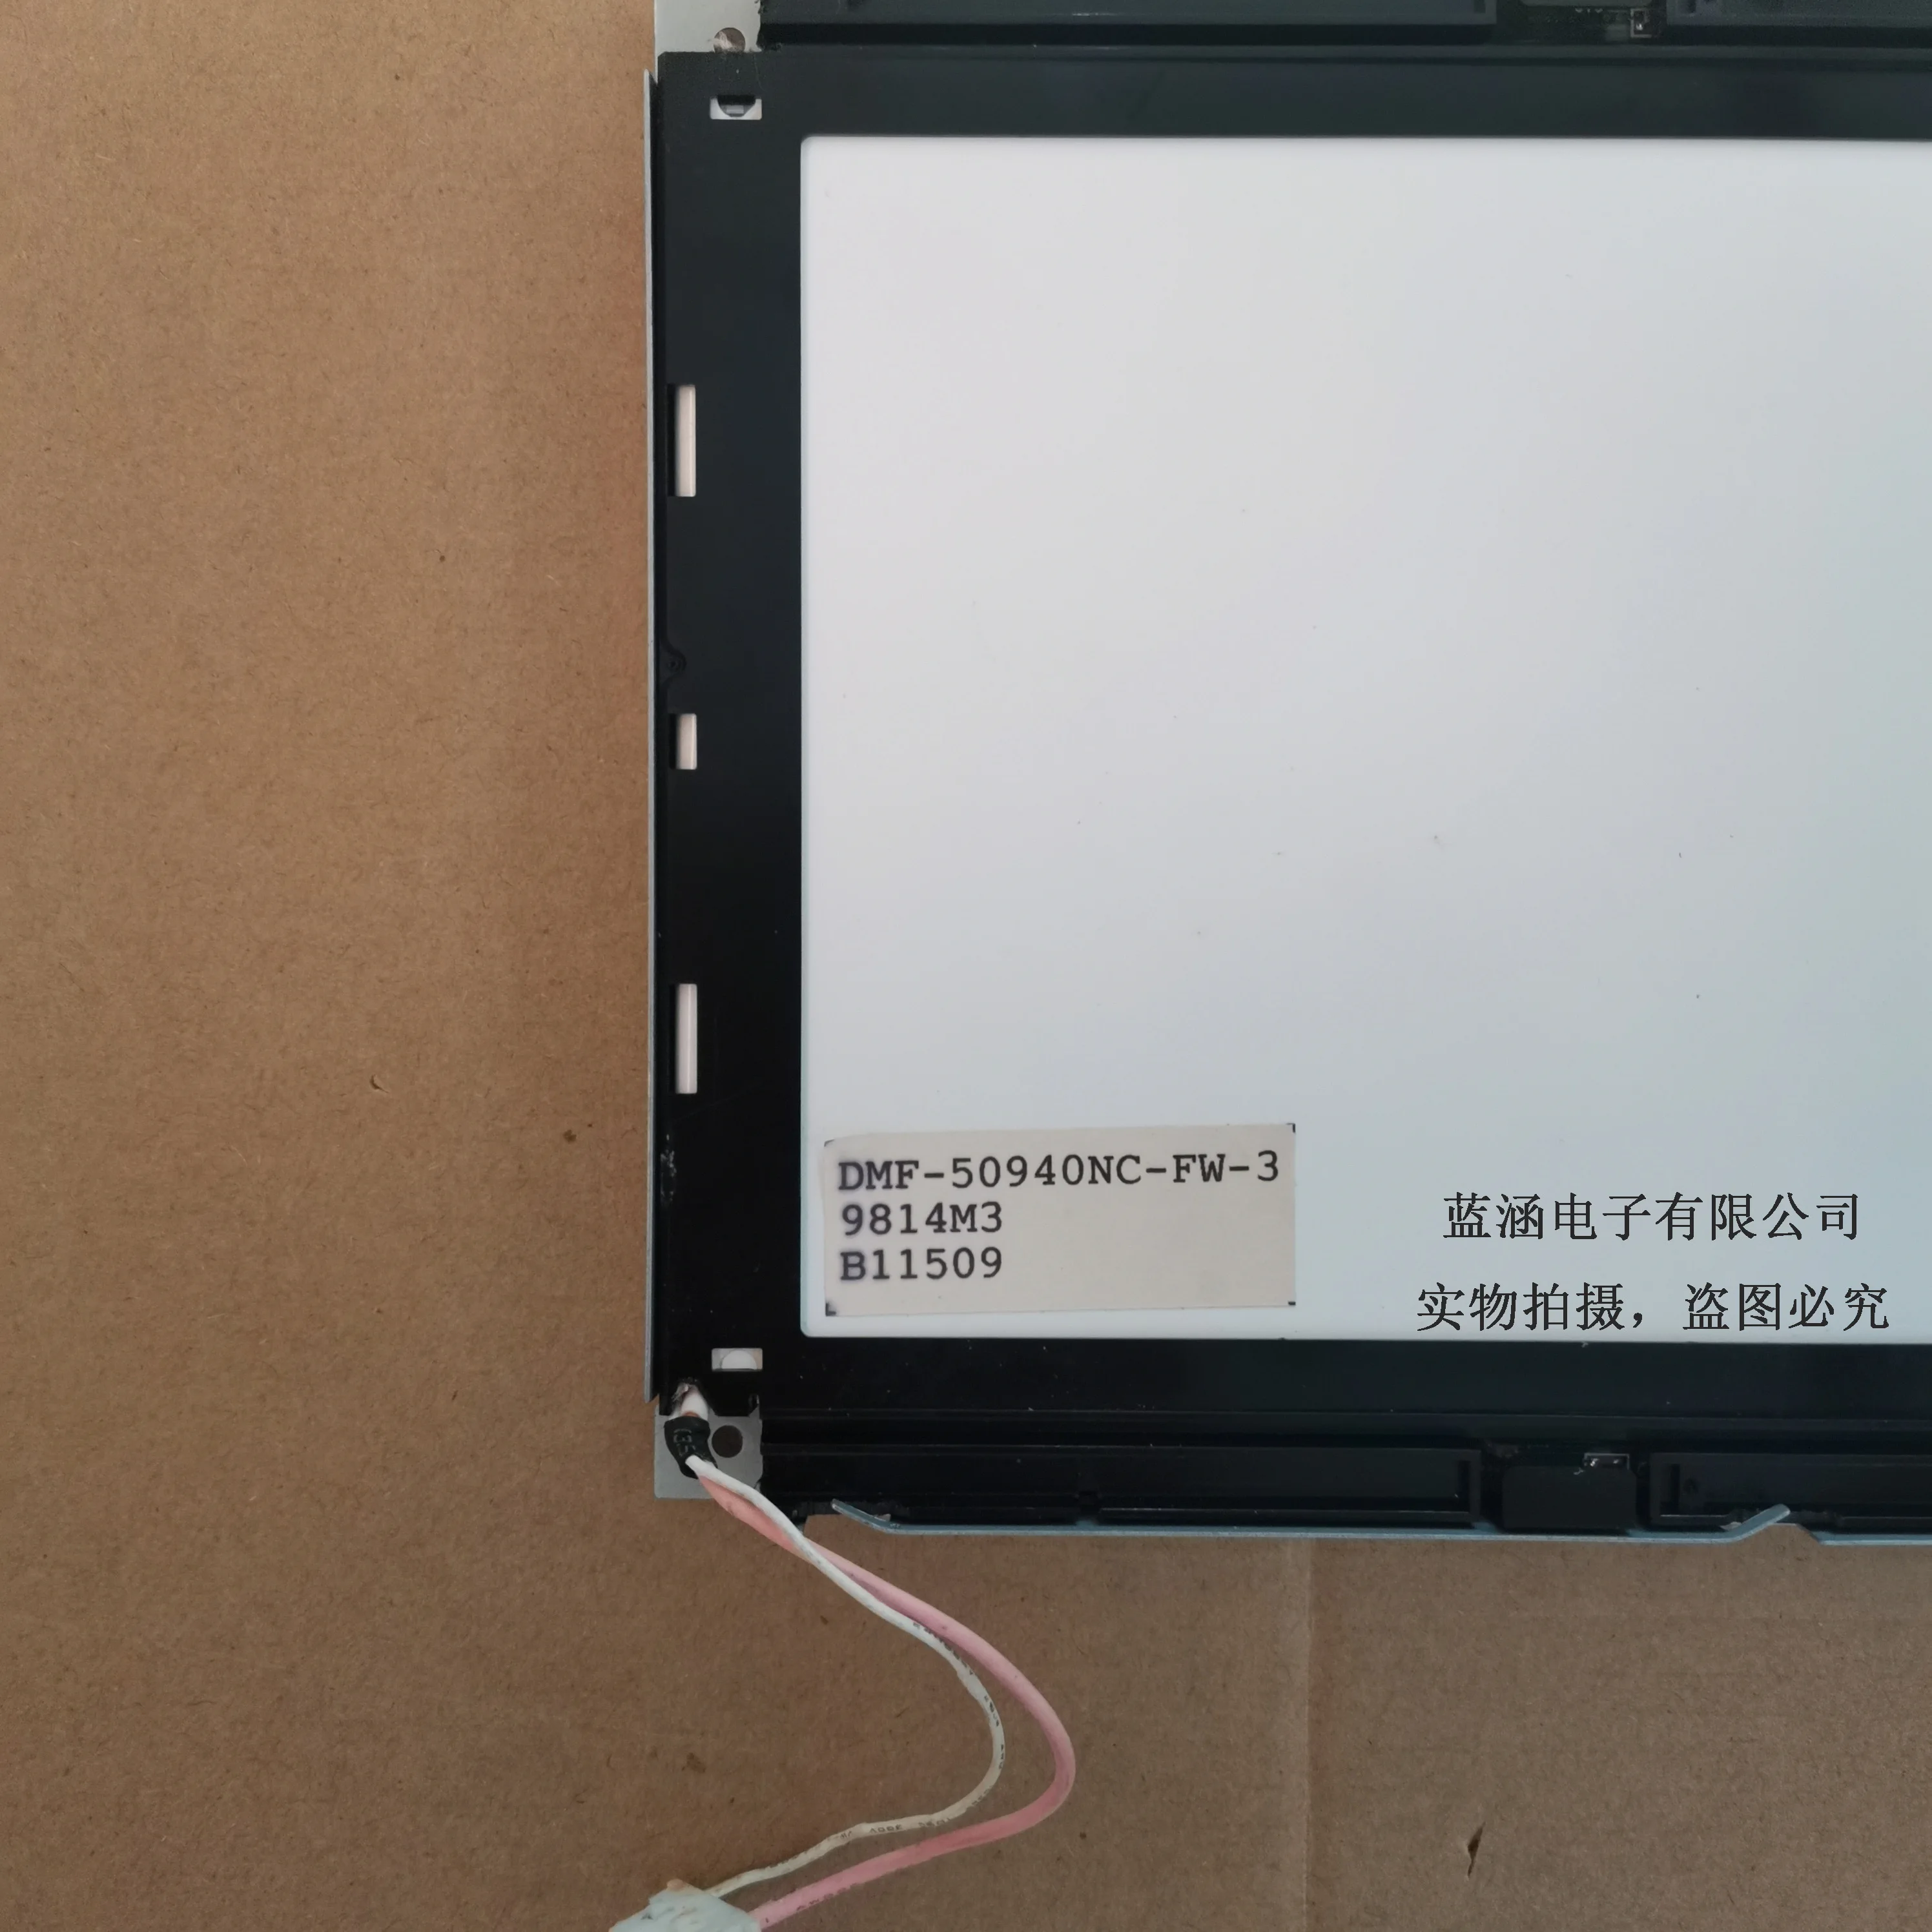 

DMF-50940NC-FW-3 LCD display screen